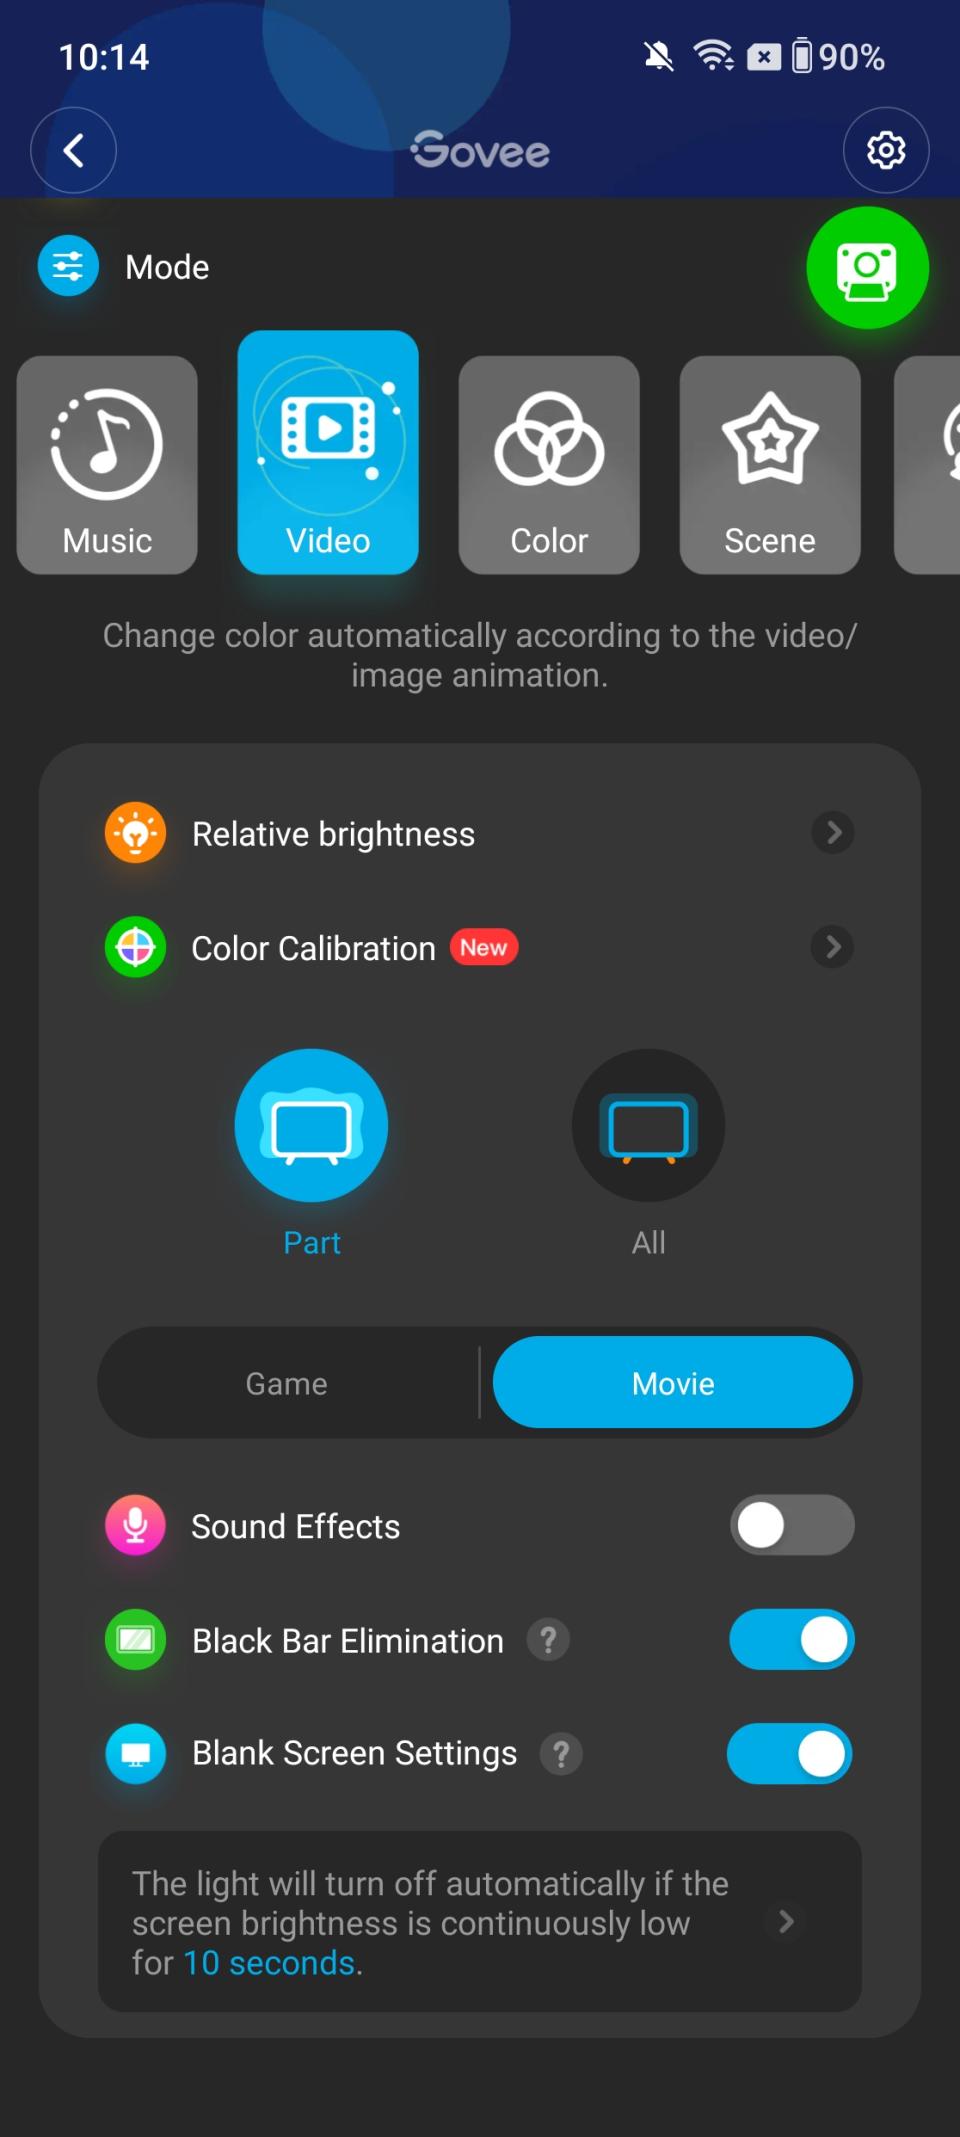 Govee app screenshots for TV Backlight 3 Lite